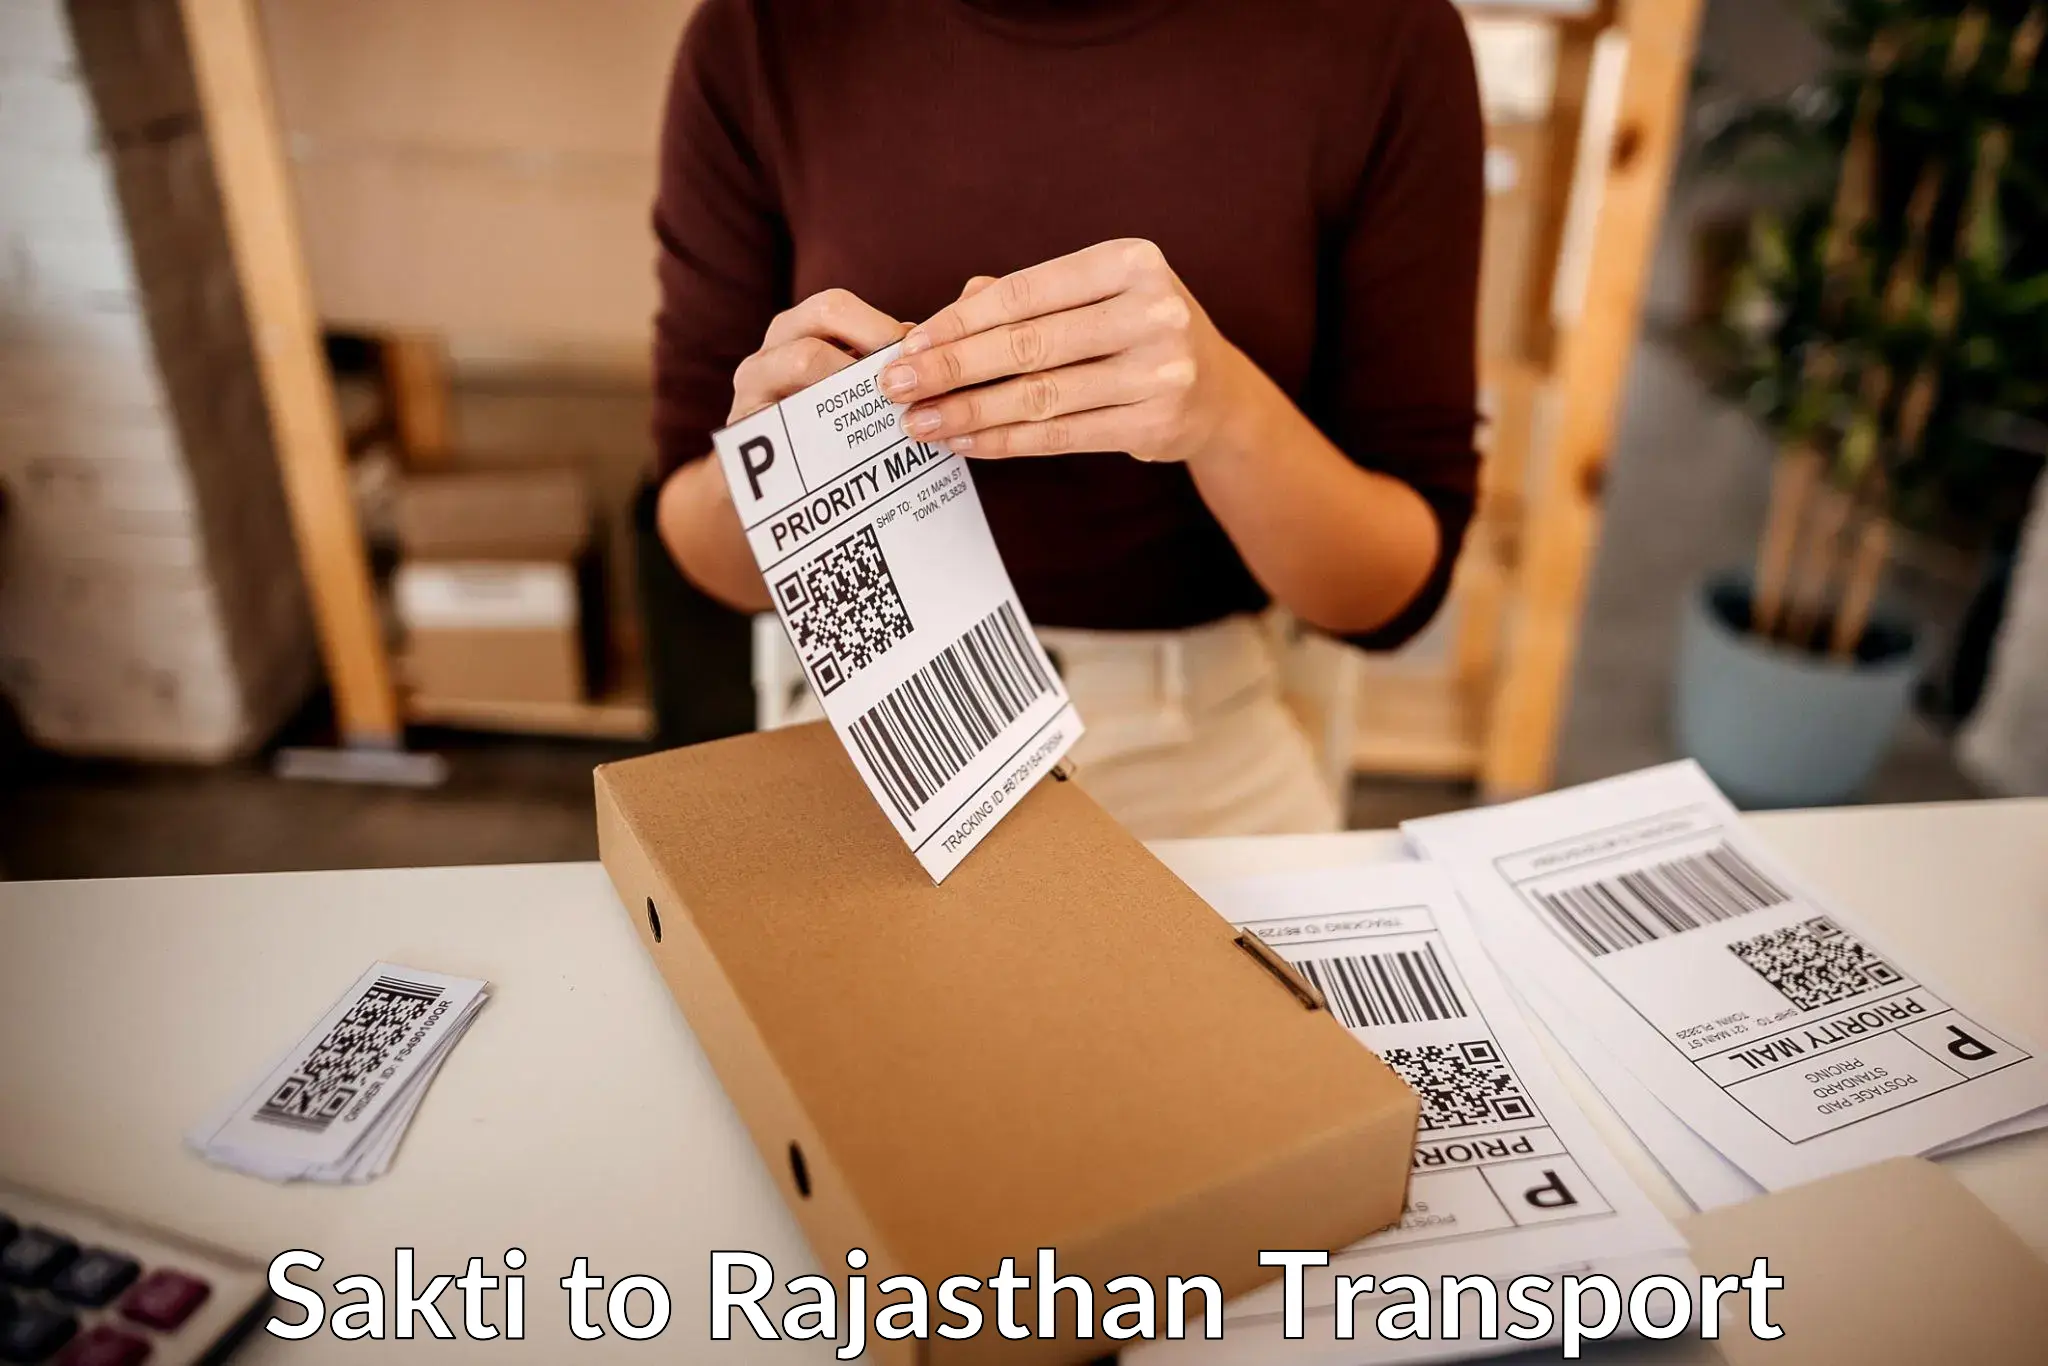 Delivery service Sakti to Sultana